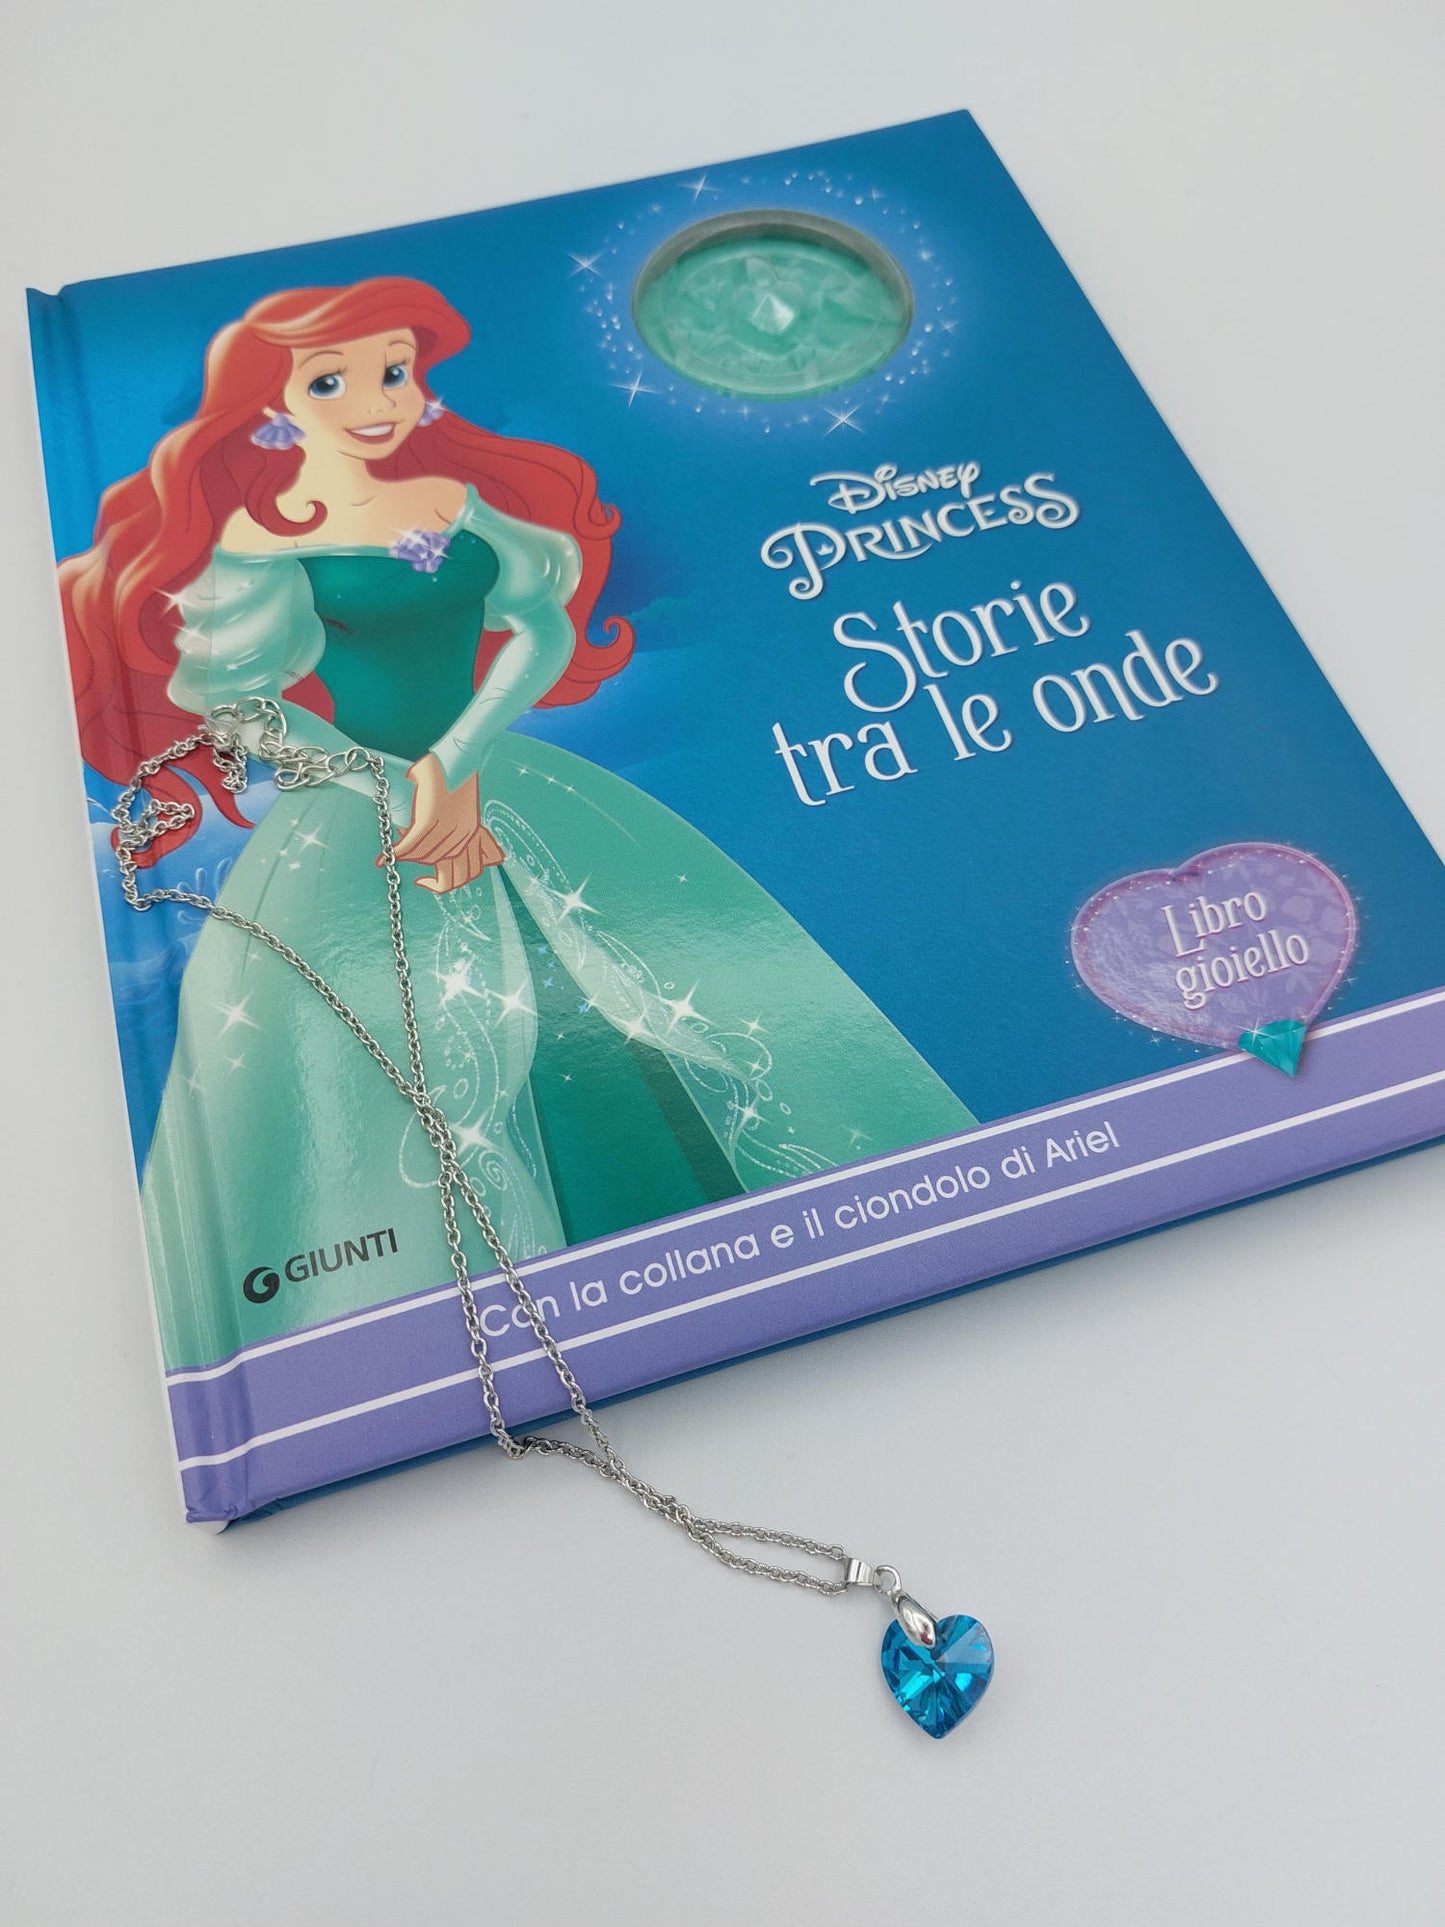 Disney Princess Storie tra le onde. Libro Gioiello